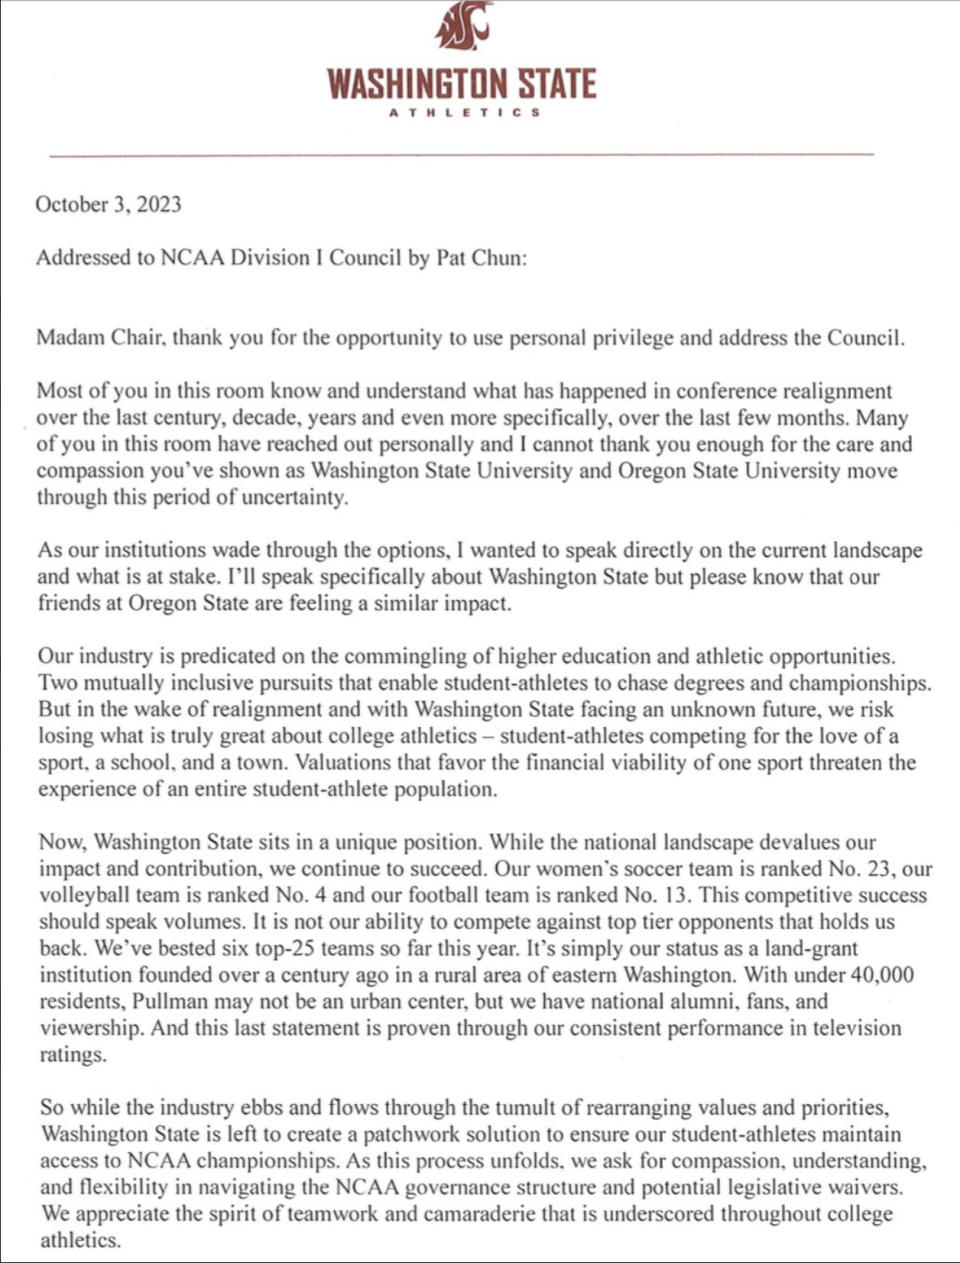 Message from Washington State athletics director Pat Chun to NCAA Division 1 Council. | Washington State Athletics